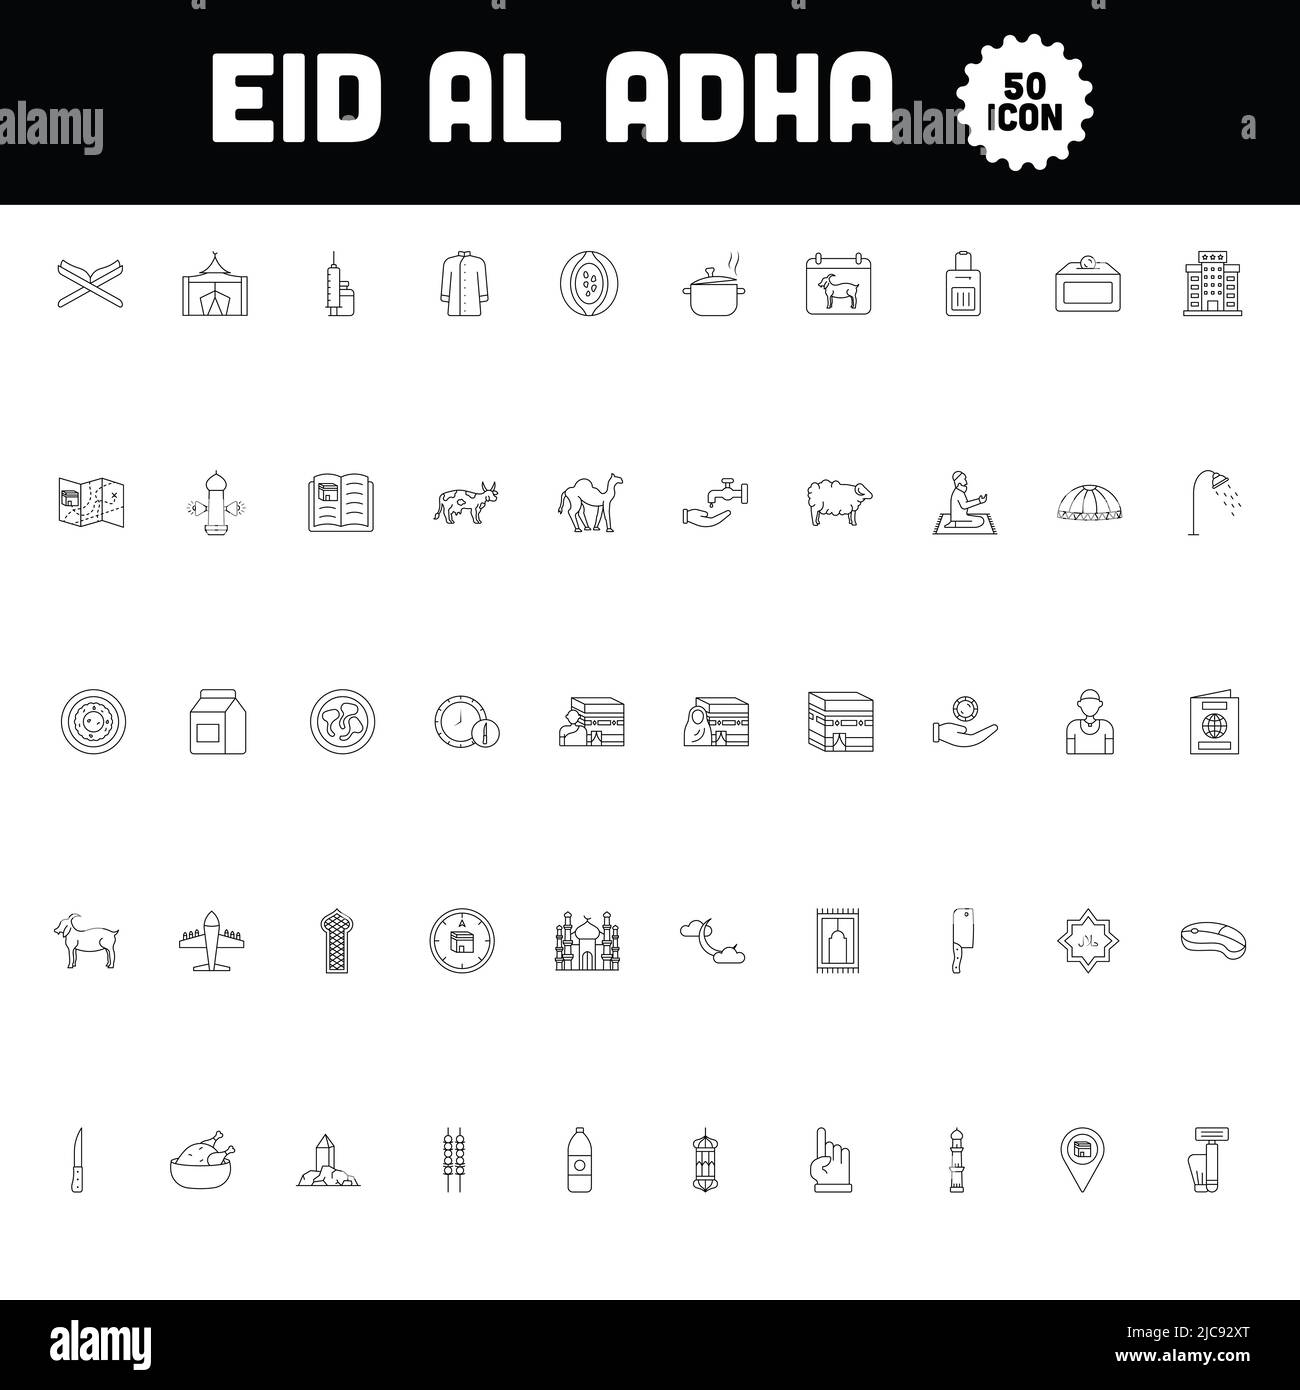 Illustration Of 50 Eid Al Adha Icon Set In Line Art. Stock Vector